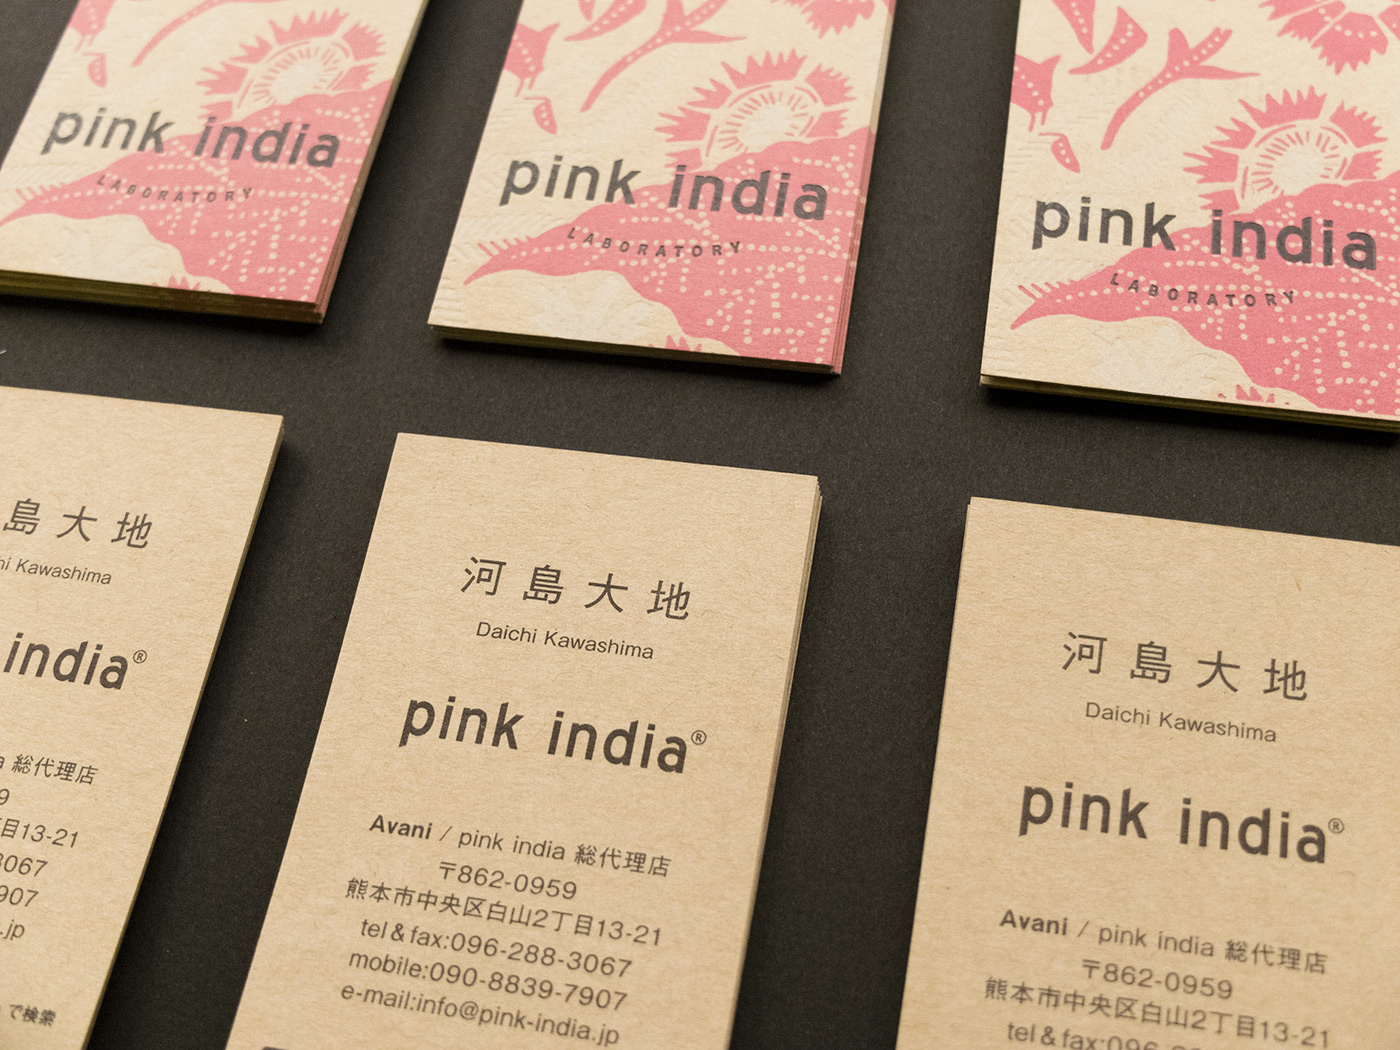 Pink Indiaの新しいロゴとクラフト紙にピンク、黒、白インクで活版印刷した名刺